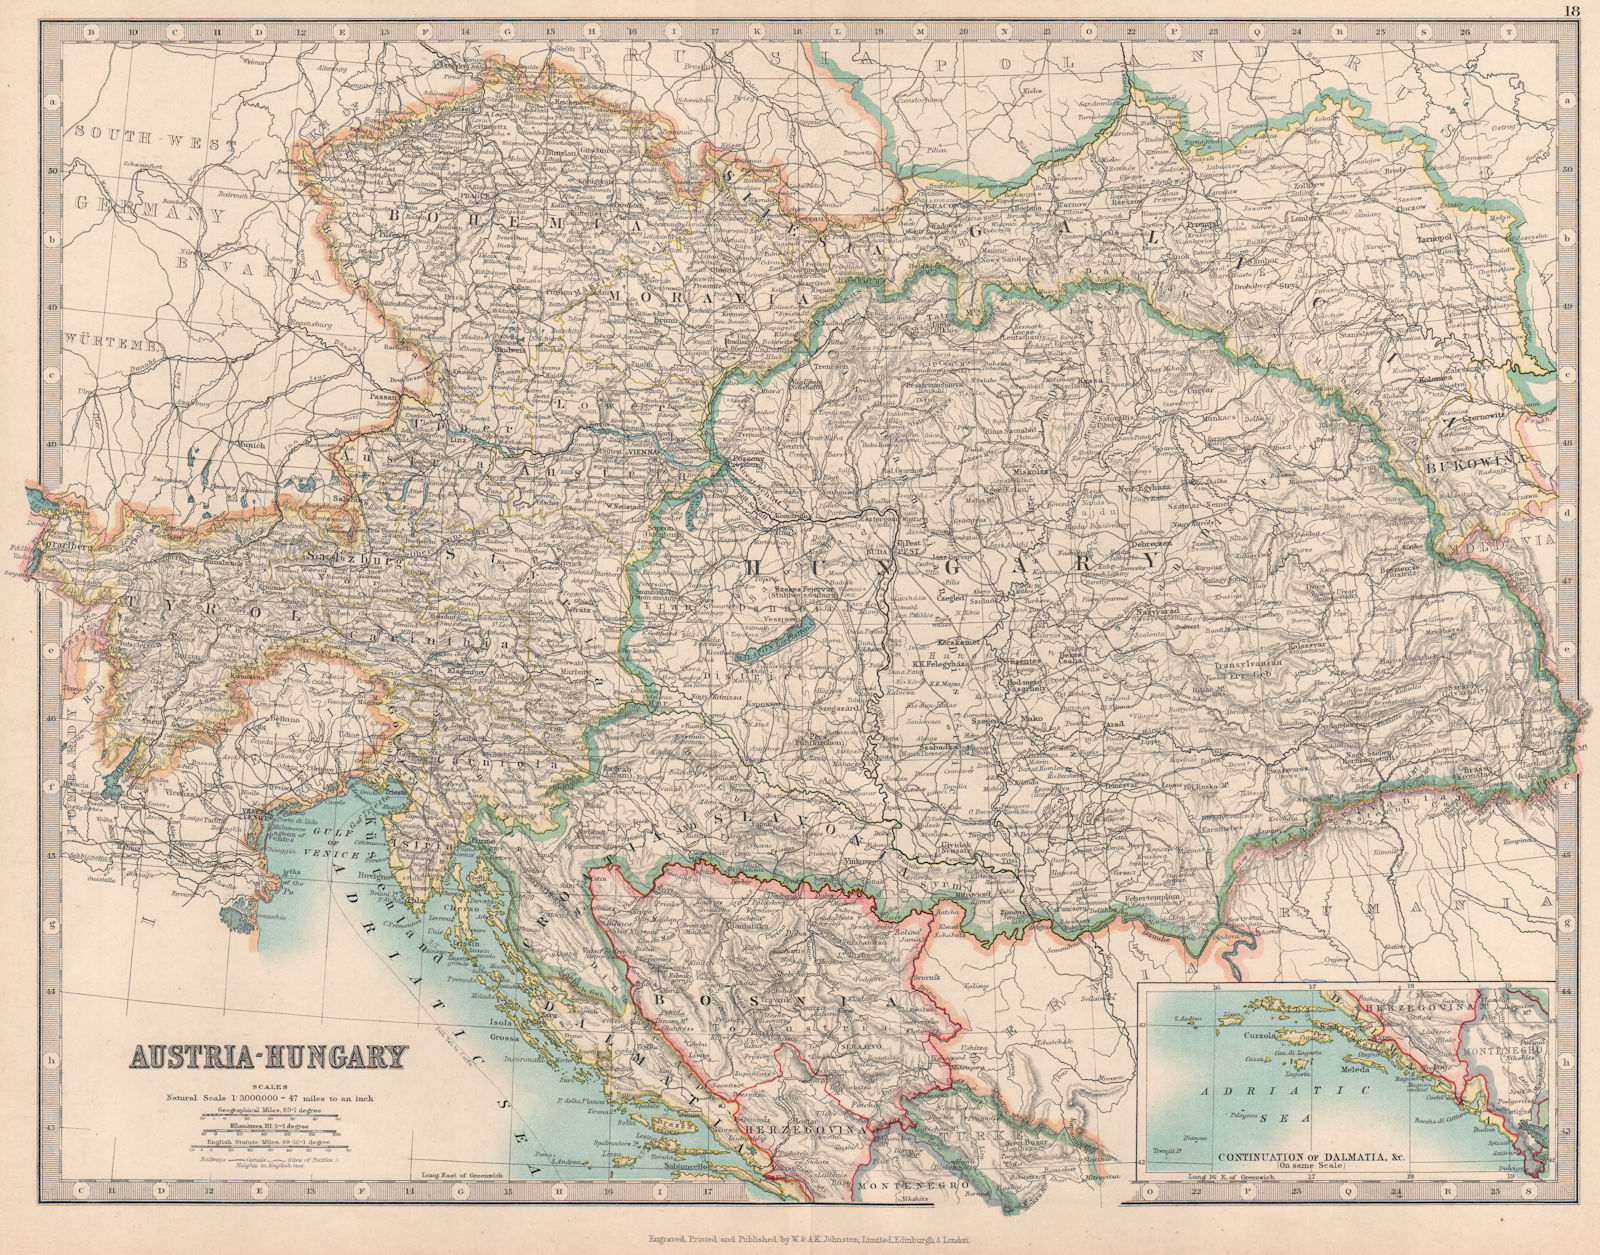 AUSTRIA-HUNGARY. Dalmatian coast. Bosnia. Railways. JOHNSTON 1912 old map